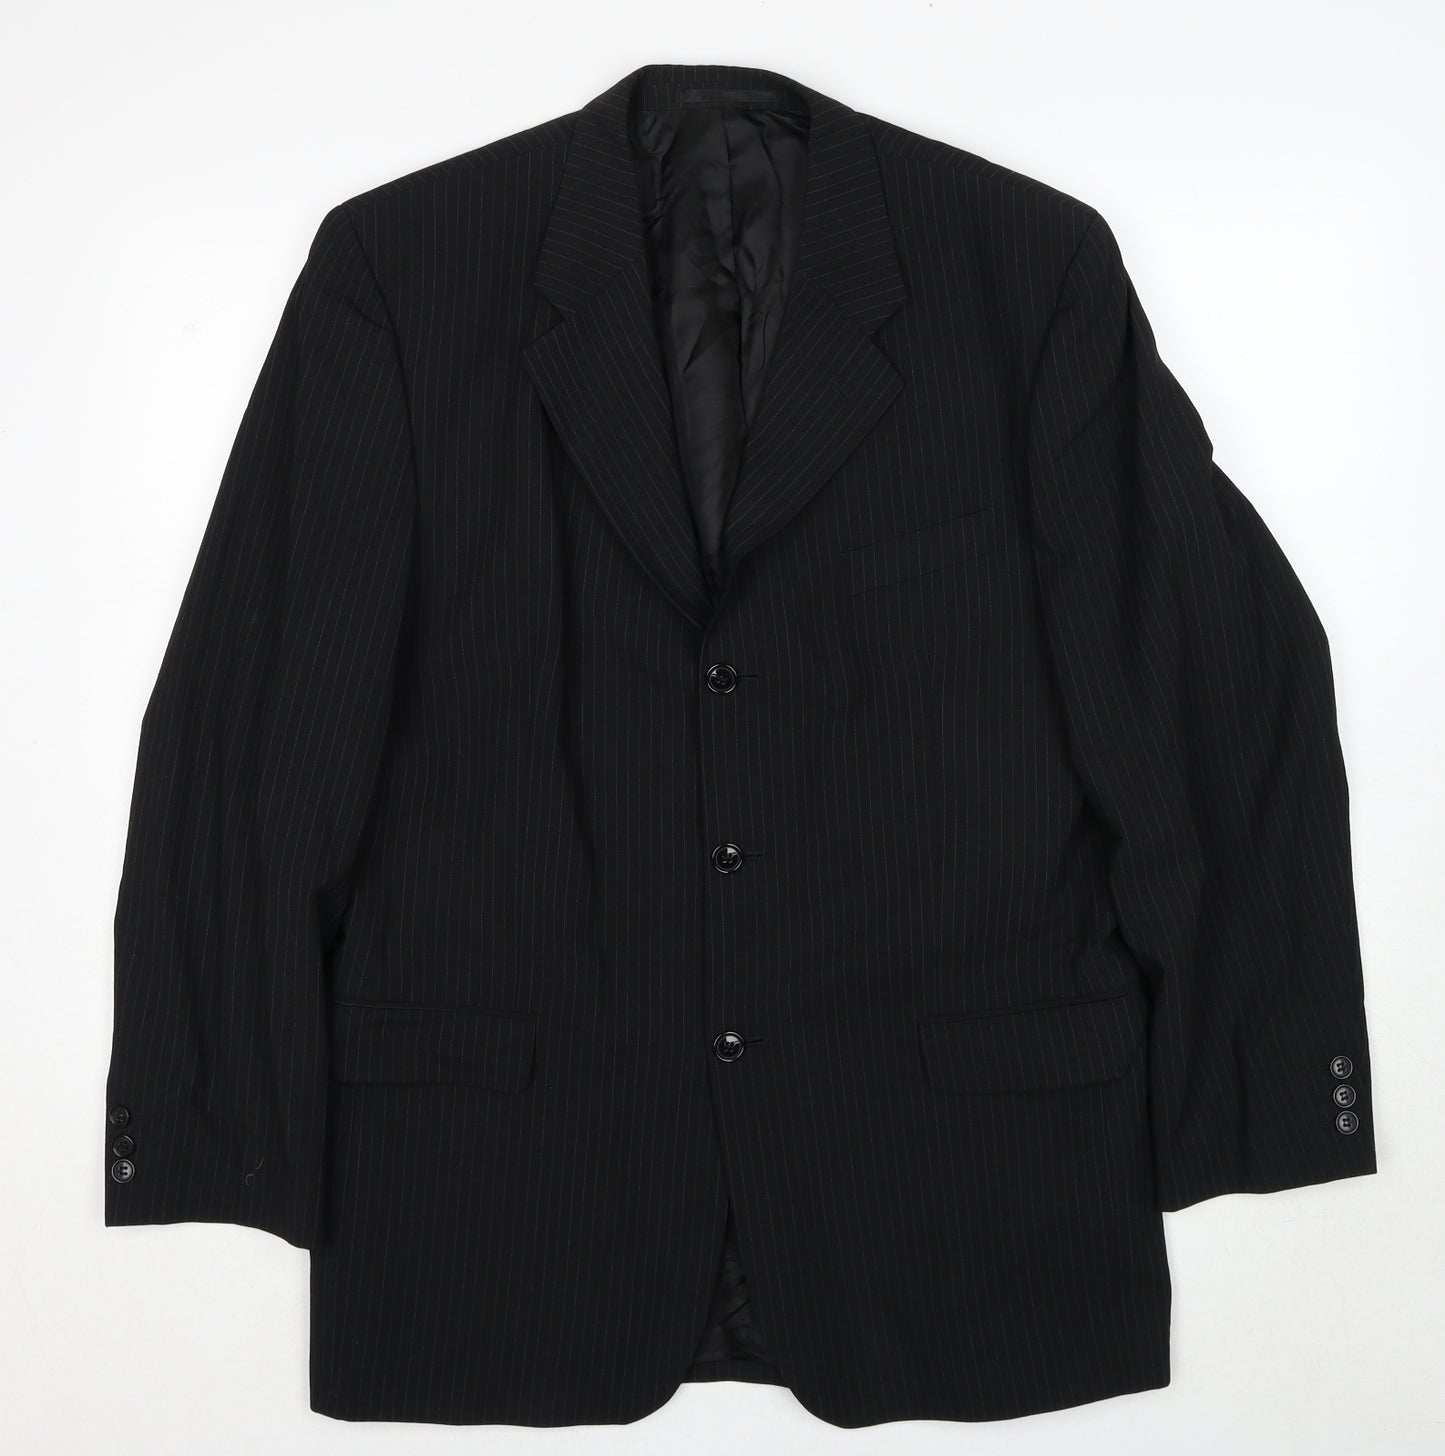 NEXT Mens Black Striped Wool Jacket Suit Jacket Size 40 Regular